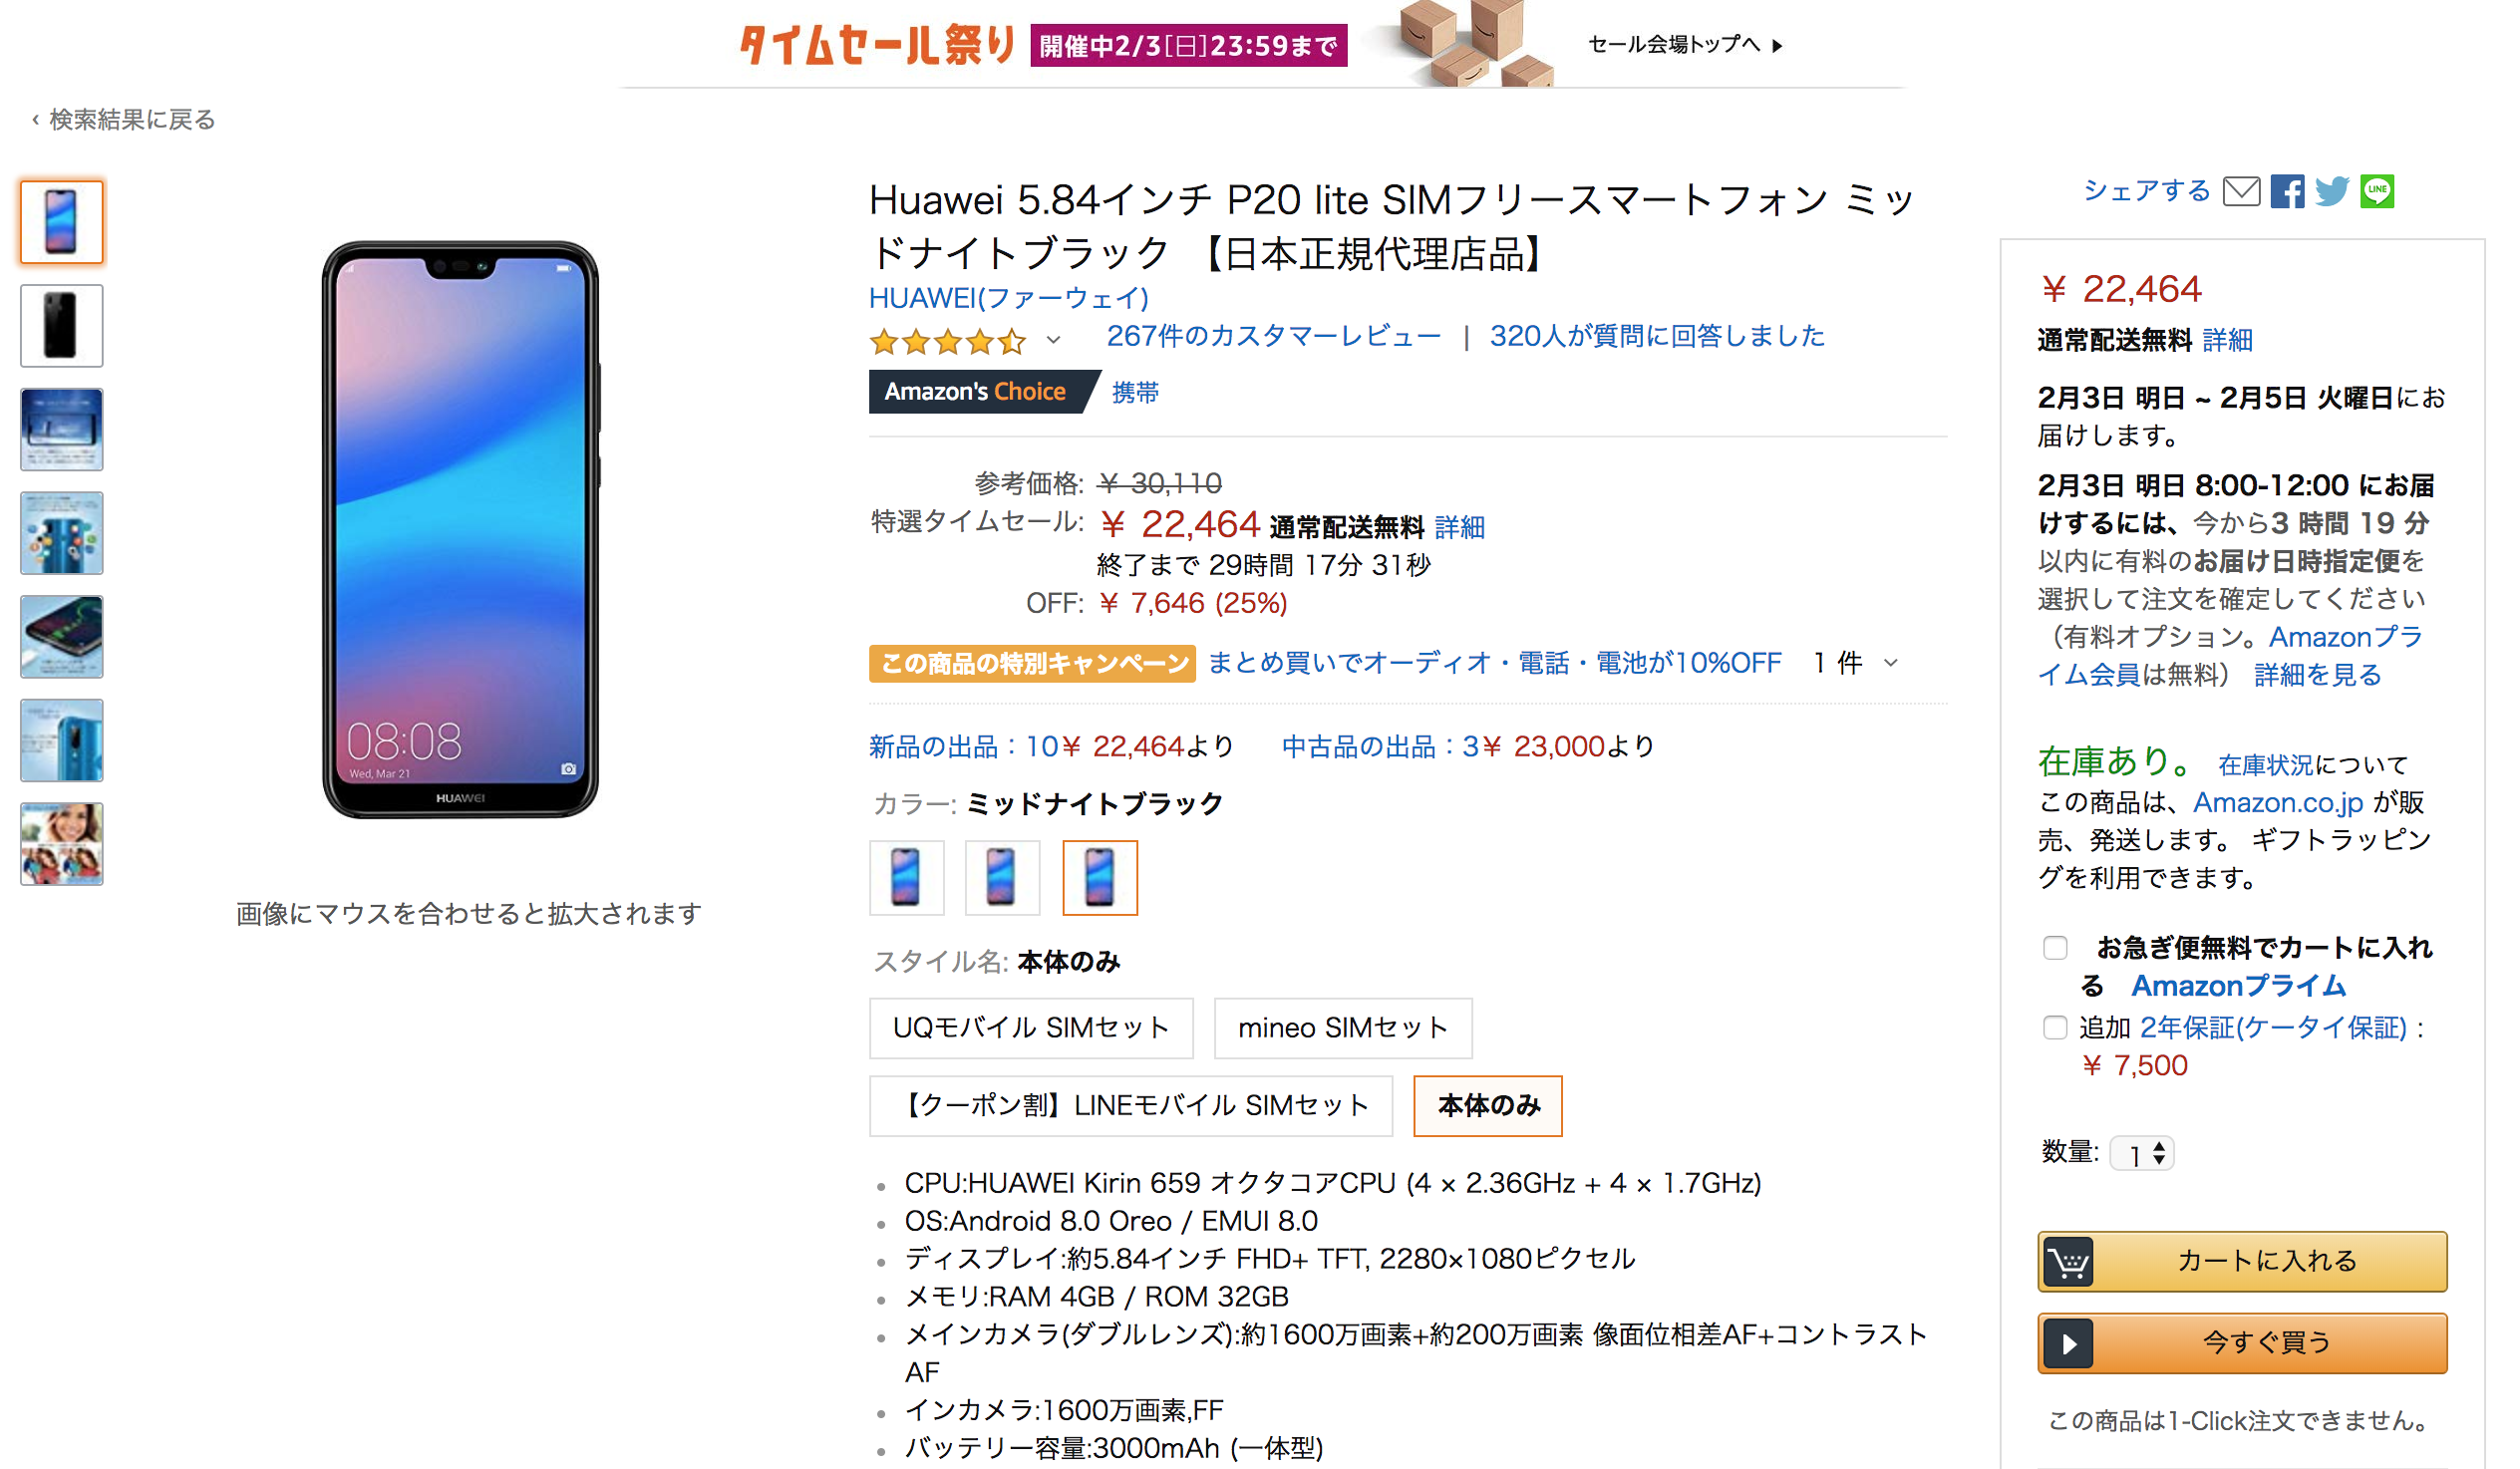 【Amazonへ急げ】Huawei P20 lite SIMフリーが2万2000円で販売中 | telektlist